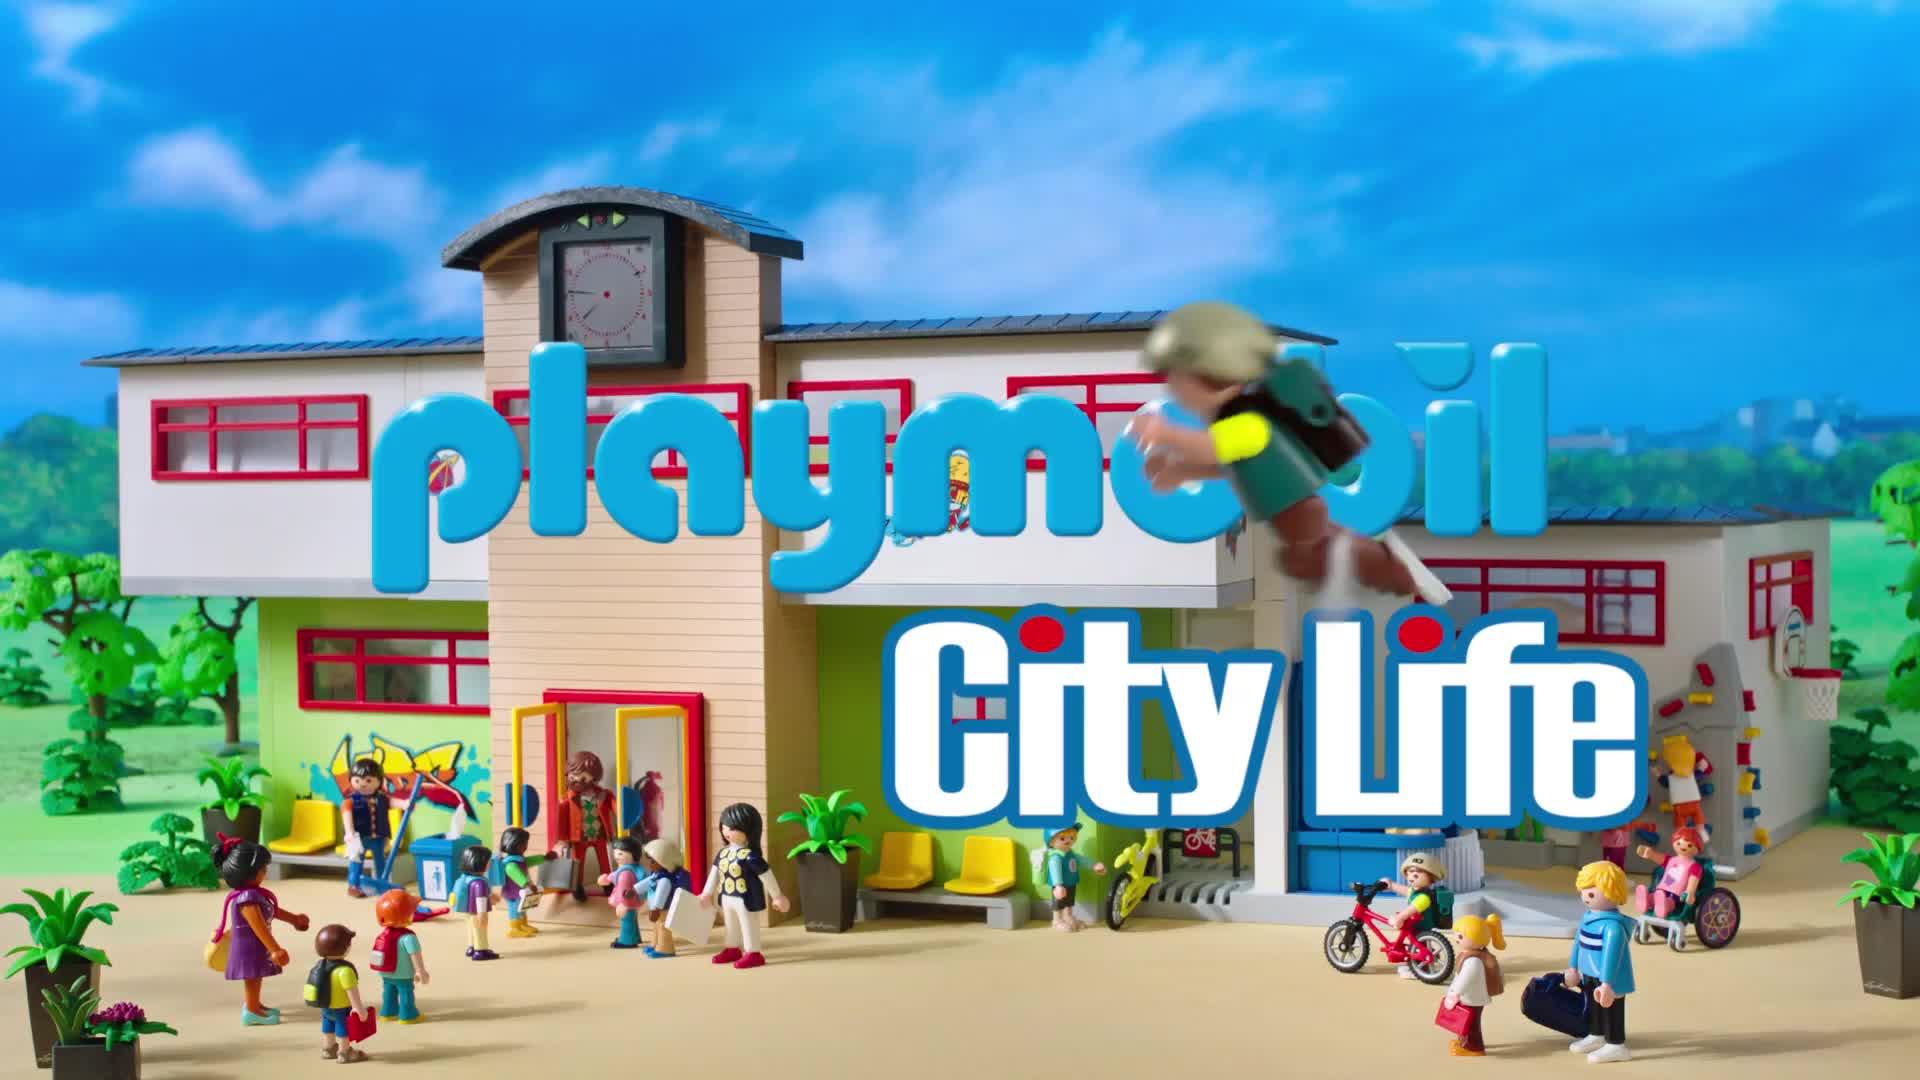 PLAYMOBIL CITY LIFE - SALLE DE SPORTS - PLAYMOBIL / City Life